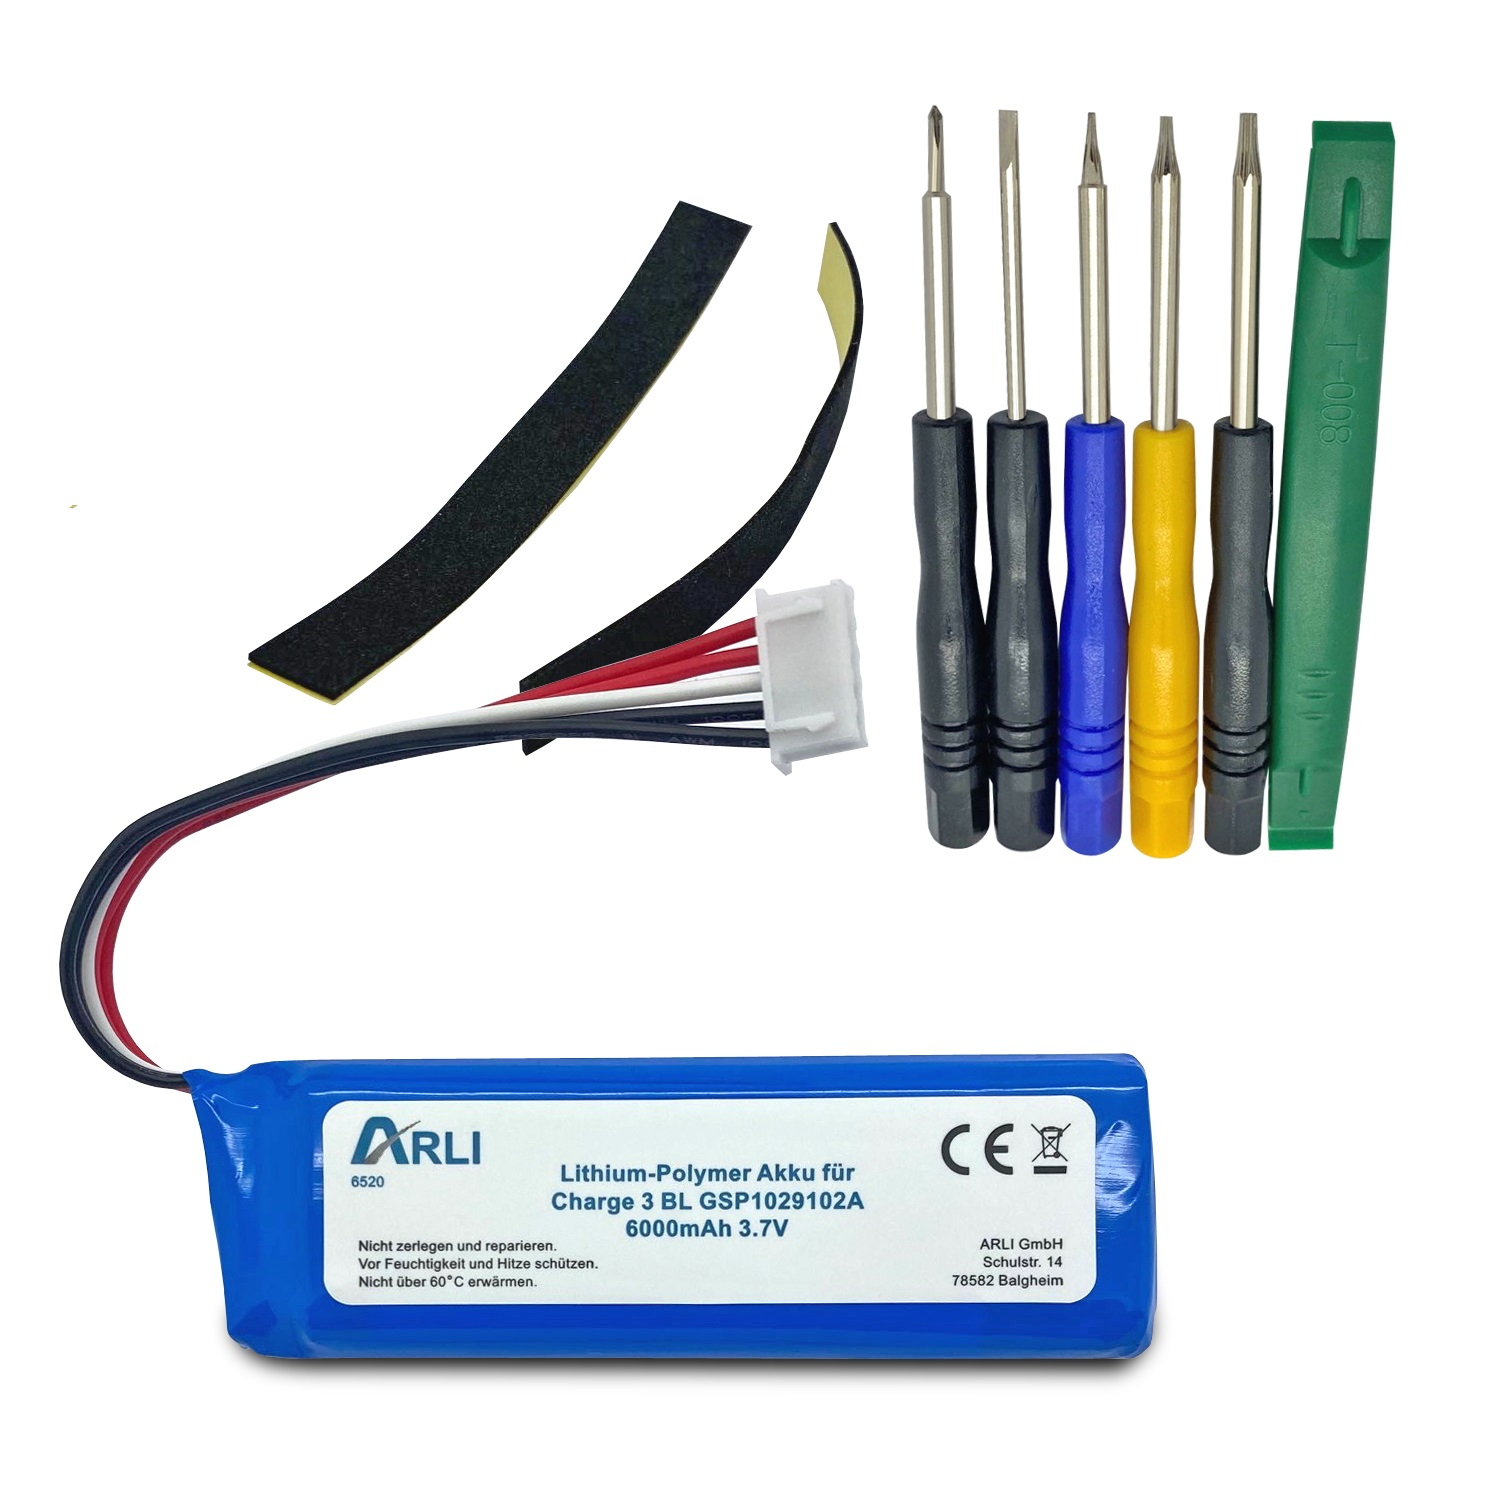 ARLI passend Charge 3 Volt, Batterie  Li-Polymer 1 mAh Li-Polymer GSP1029102A Ersatzakku, 6000 Stück BL 3.7 V 3,7 6000mAh